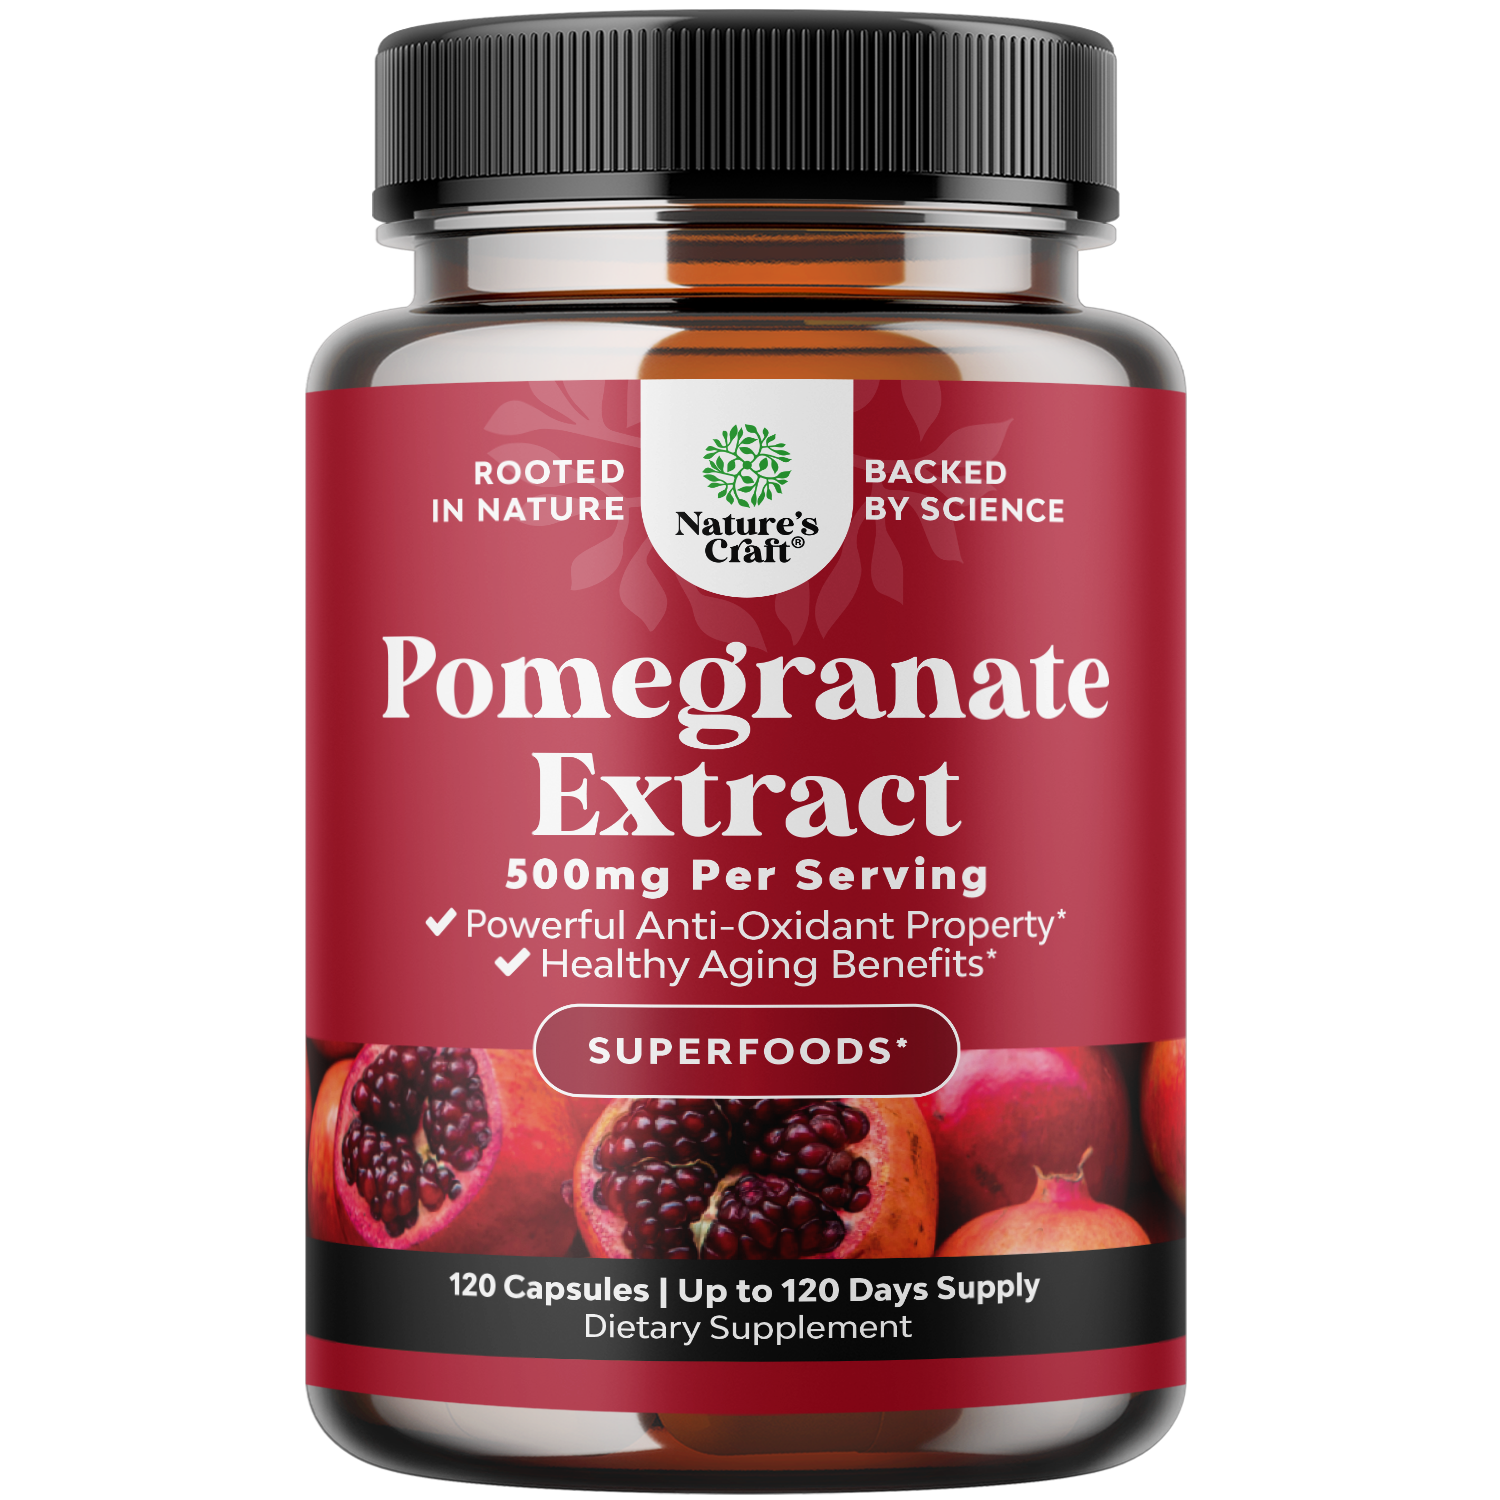 Pomegranate Extract - 120 Capsules